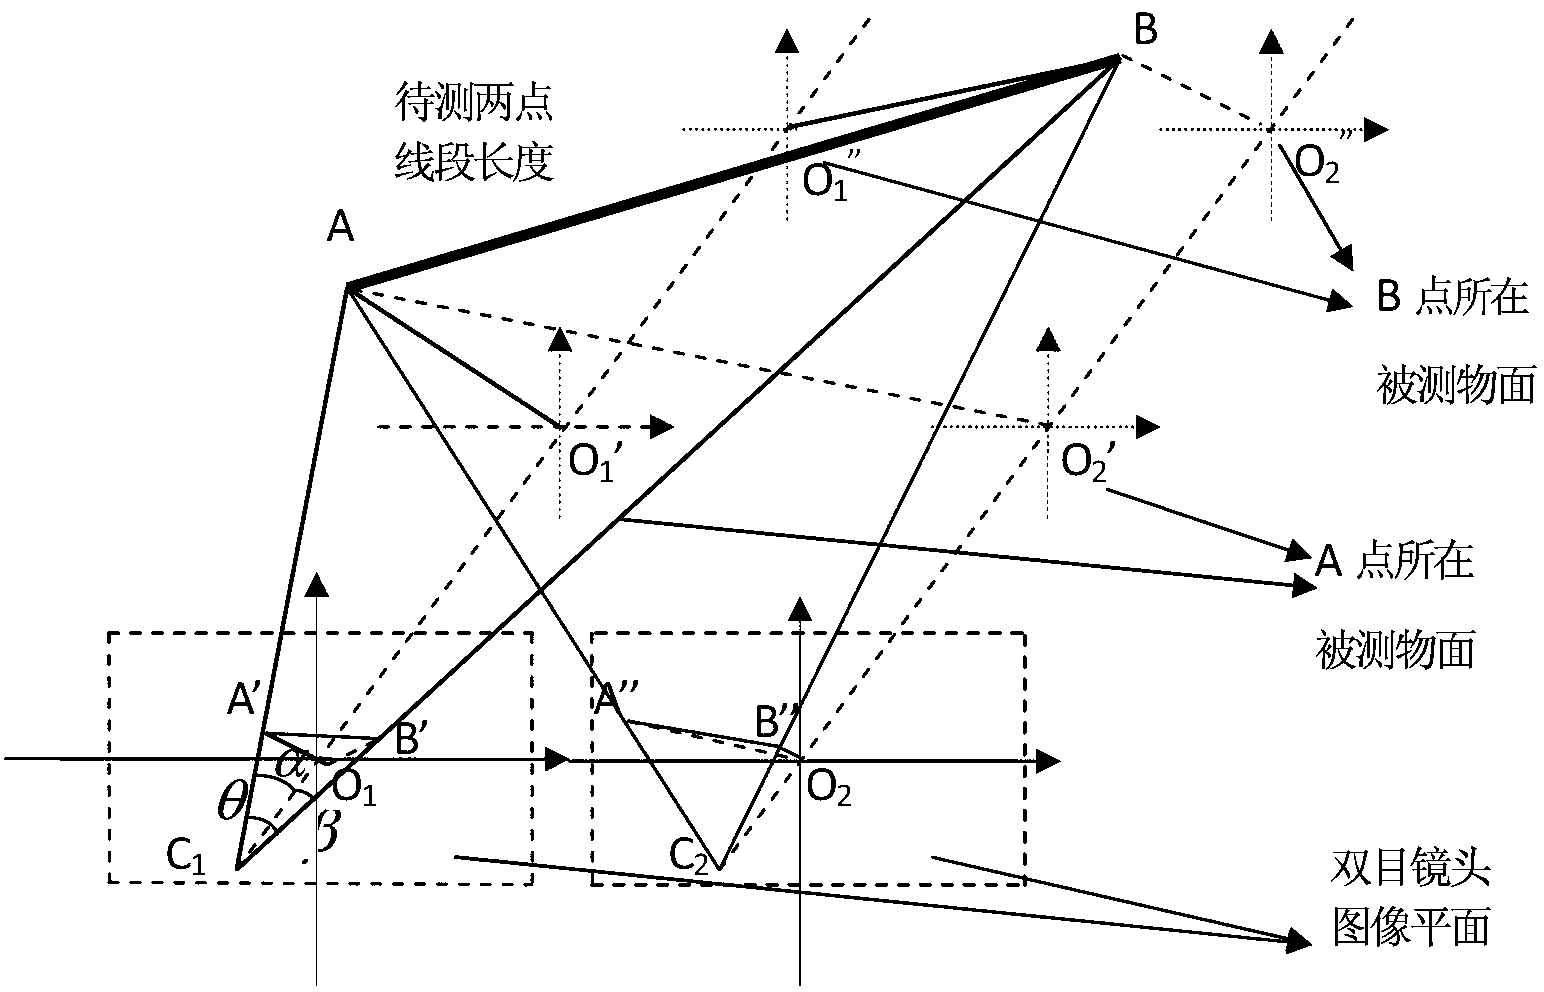 Distance measuring method applying binocular visual parallax error distance-measuring principle